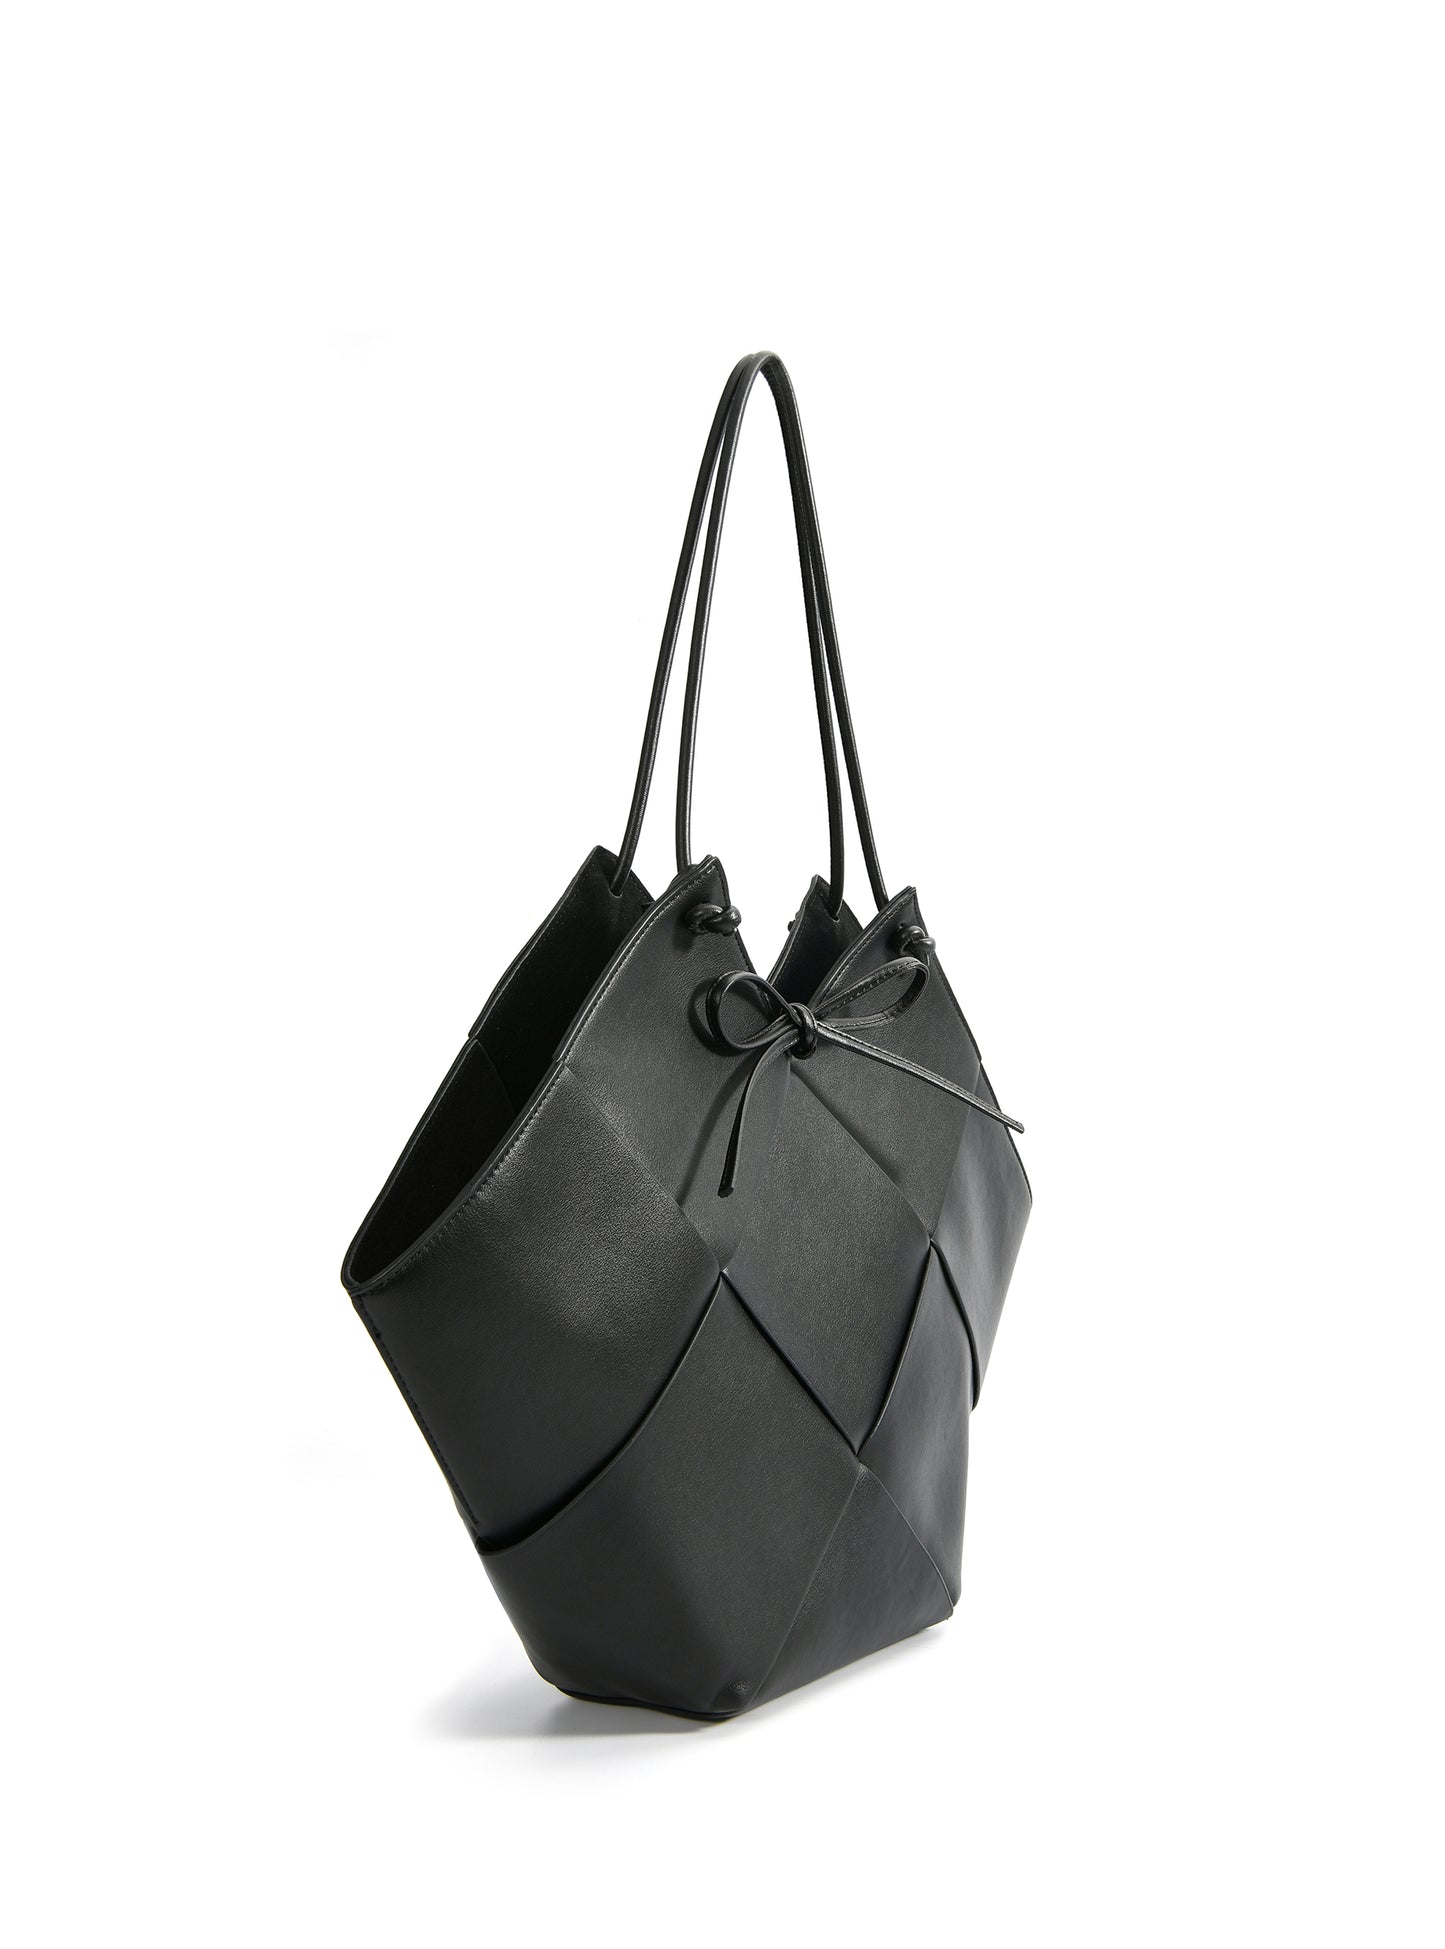 Taylor Contexture Leather Bag, Black